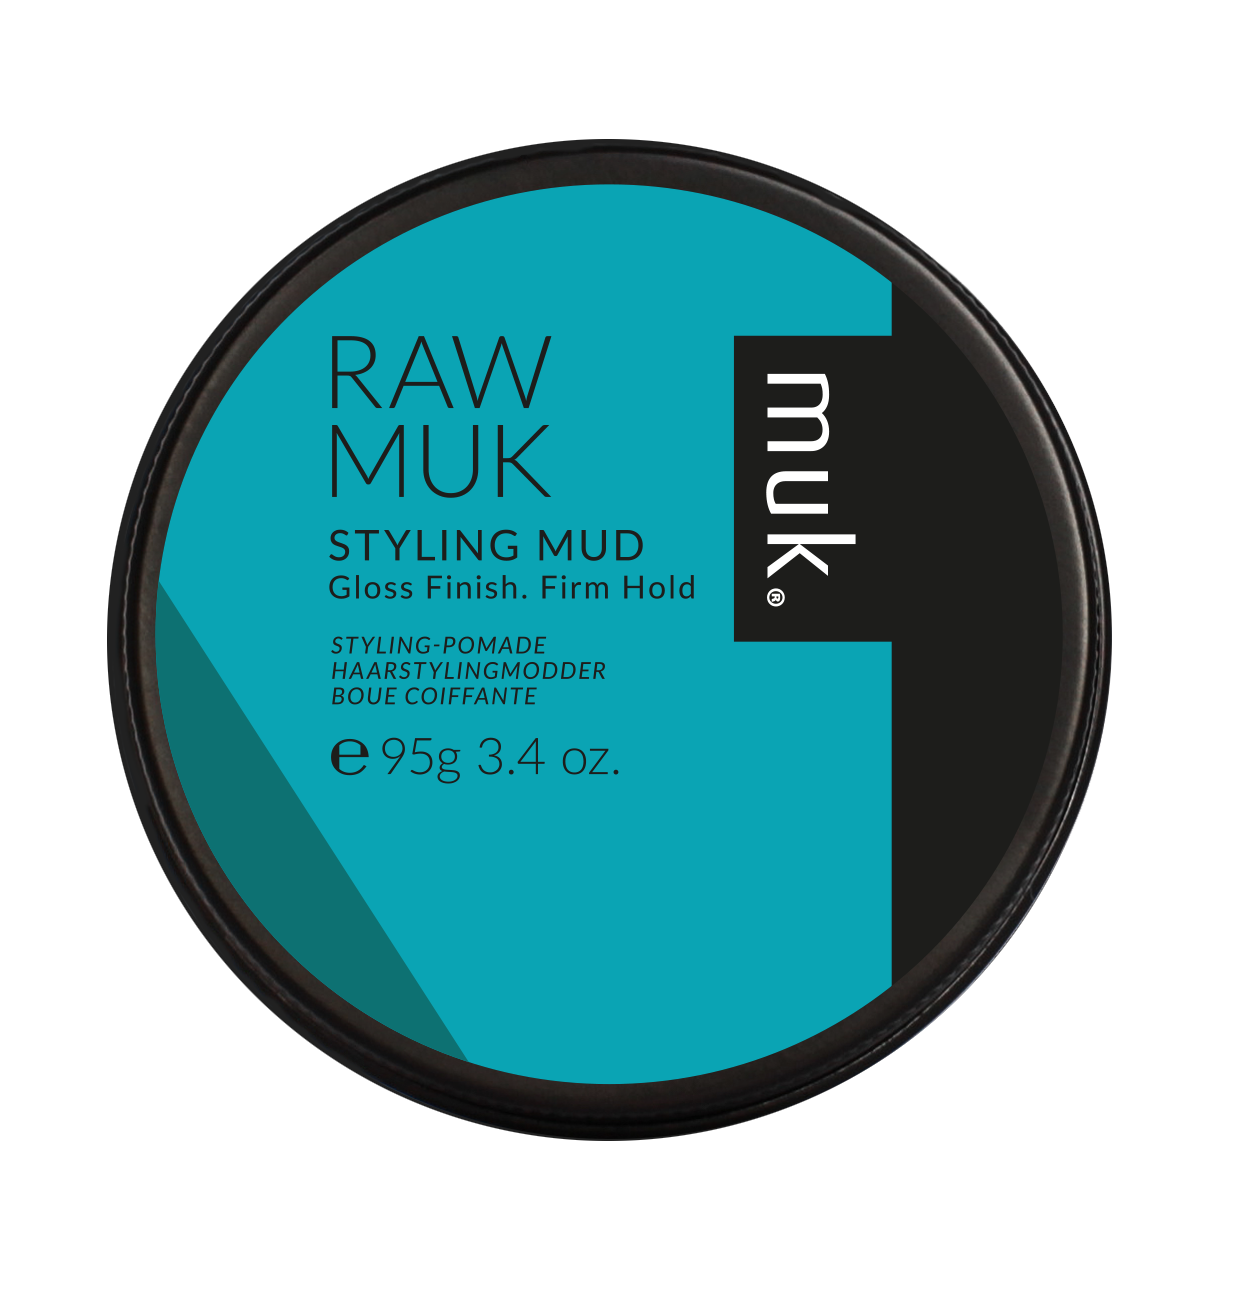 Muk Raw Styling Mud Duo pack